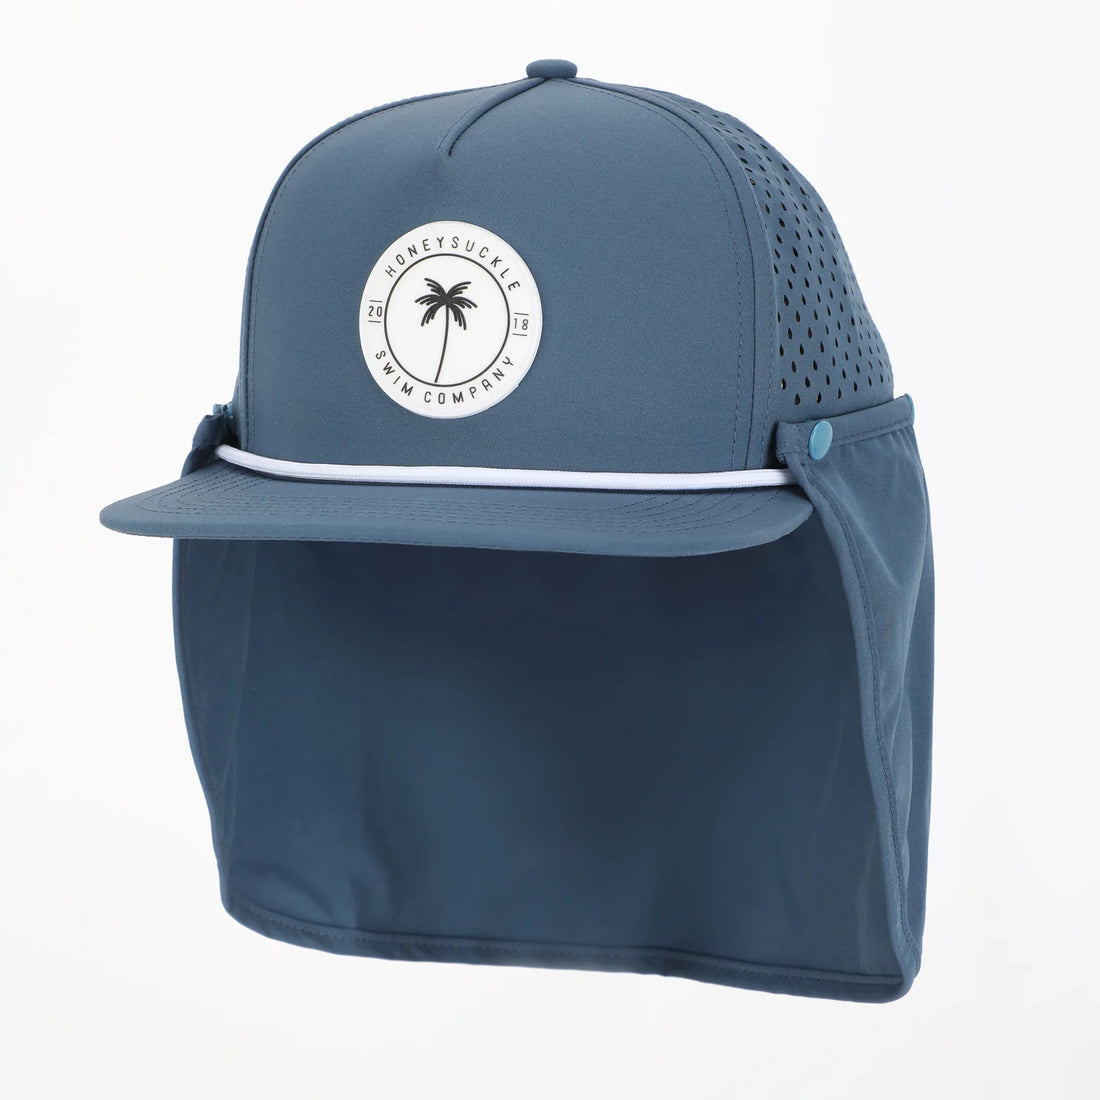 Honeysuckle Swim Co - Snapback Hat (Dark Blue)